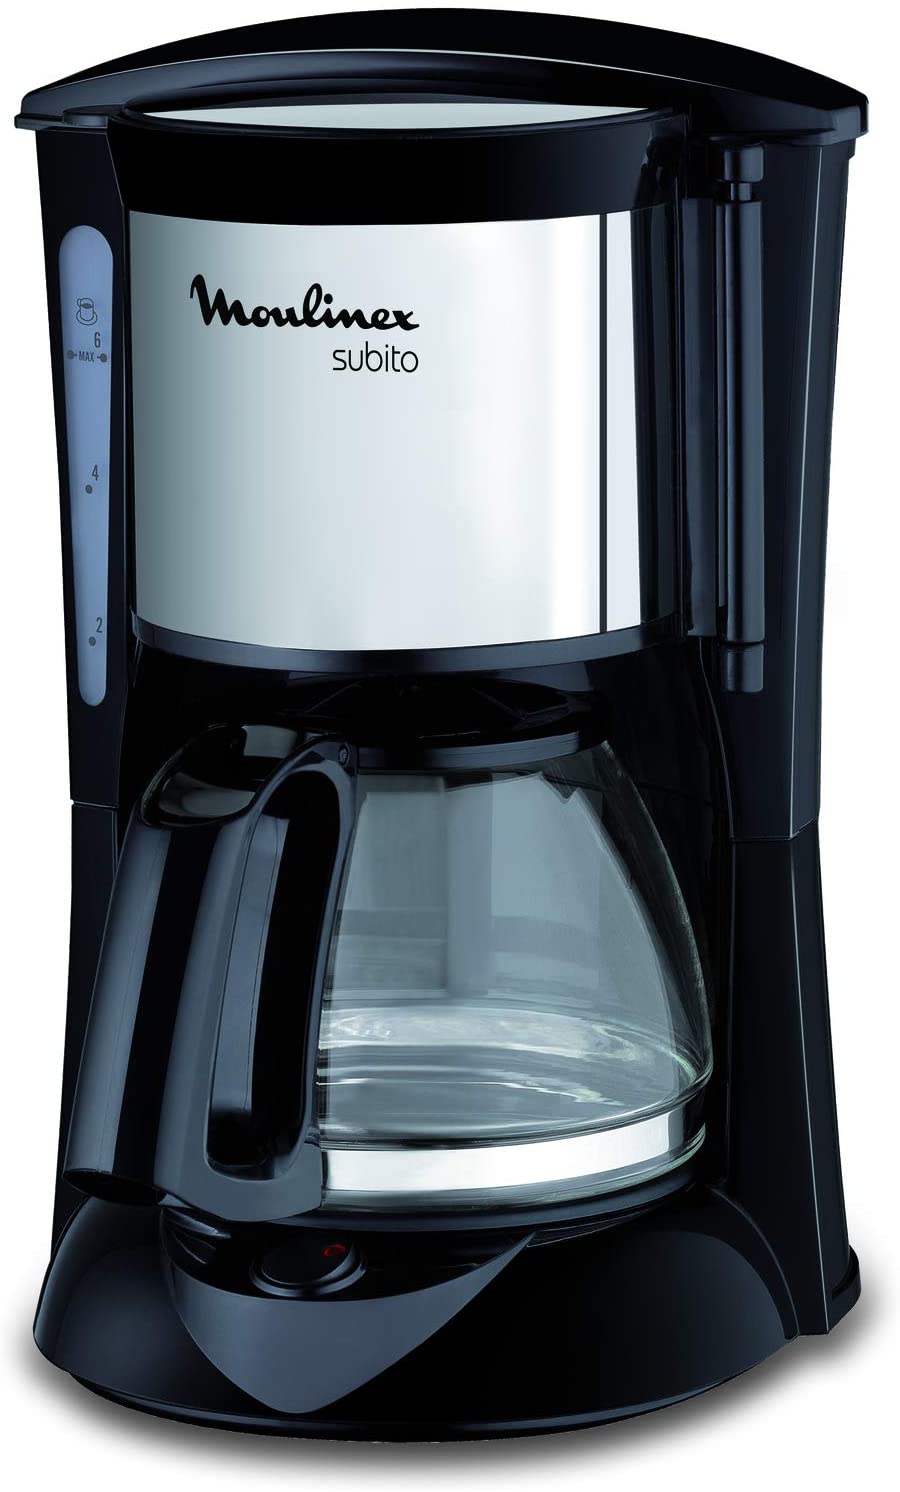 Moulinex FG1508 - coffee makers (freestanding, Coffee, Drip coffee maker, Black, Metallic)